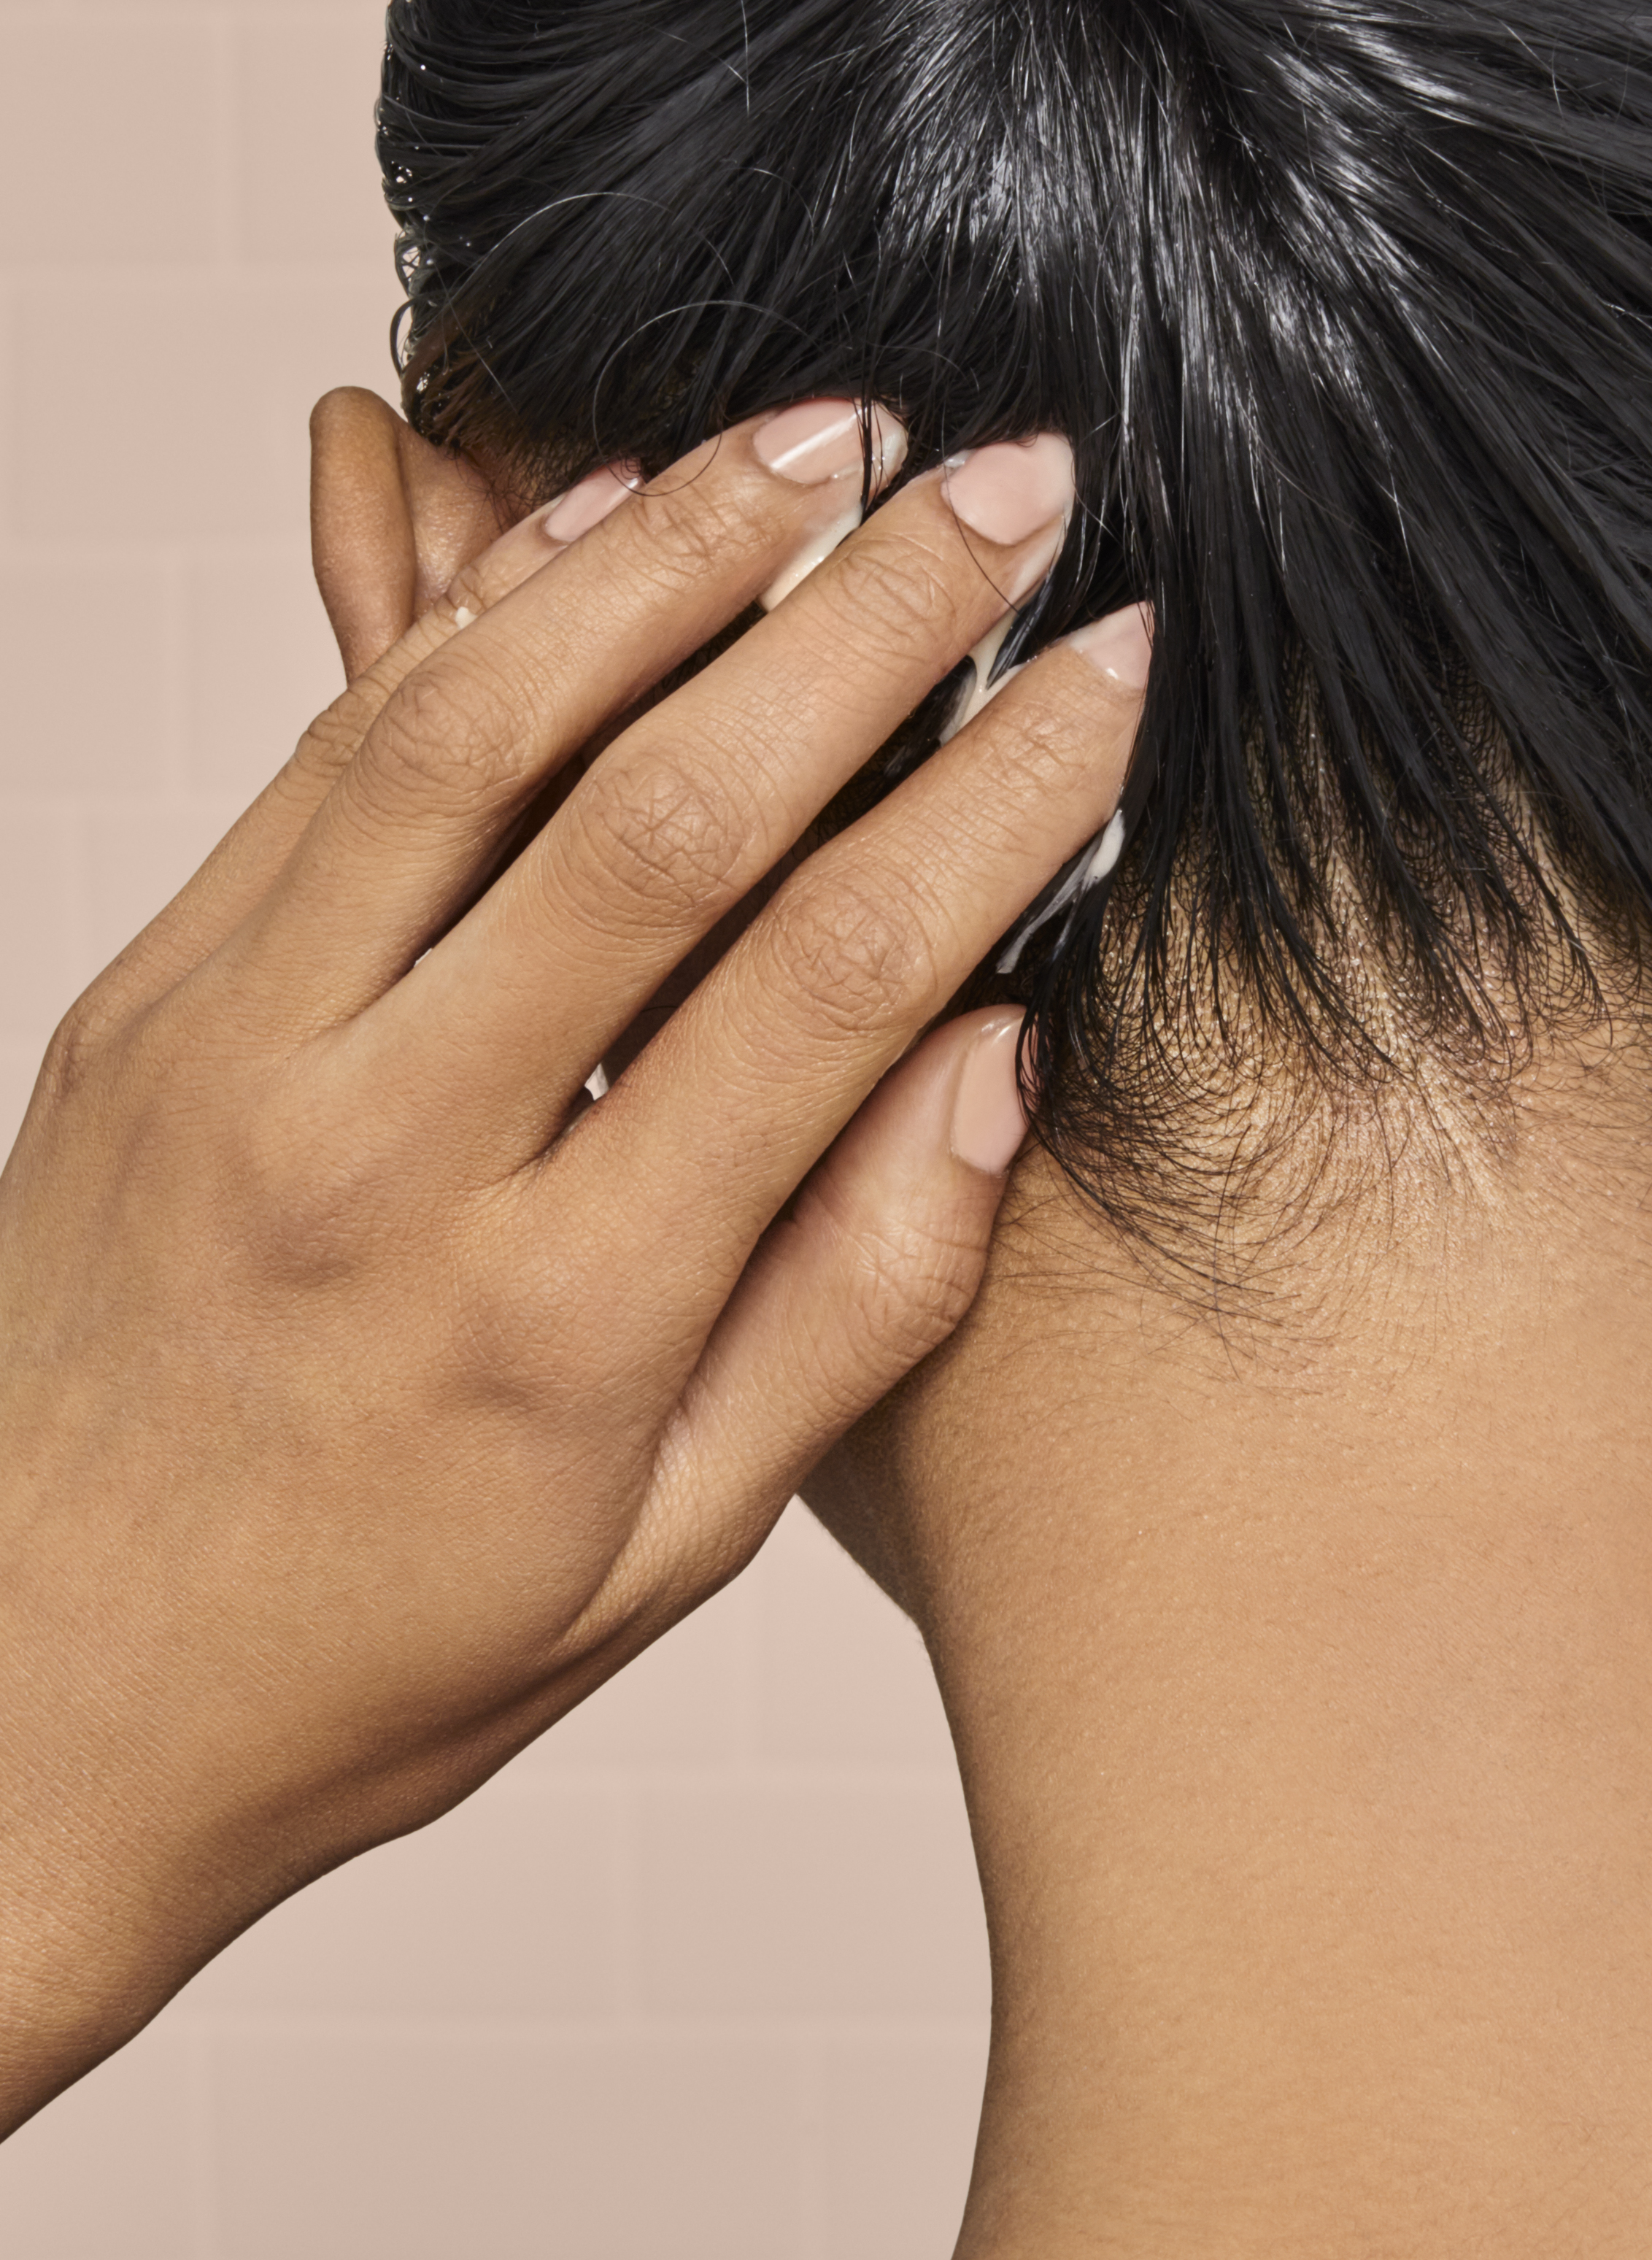 how to moisturize scalp